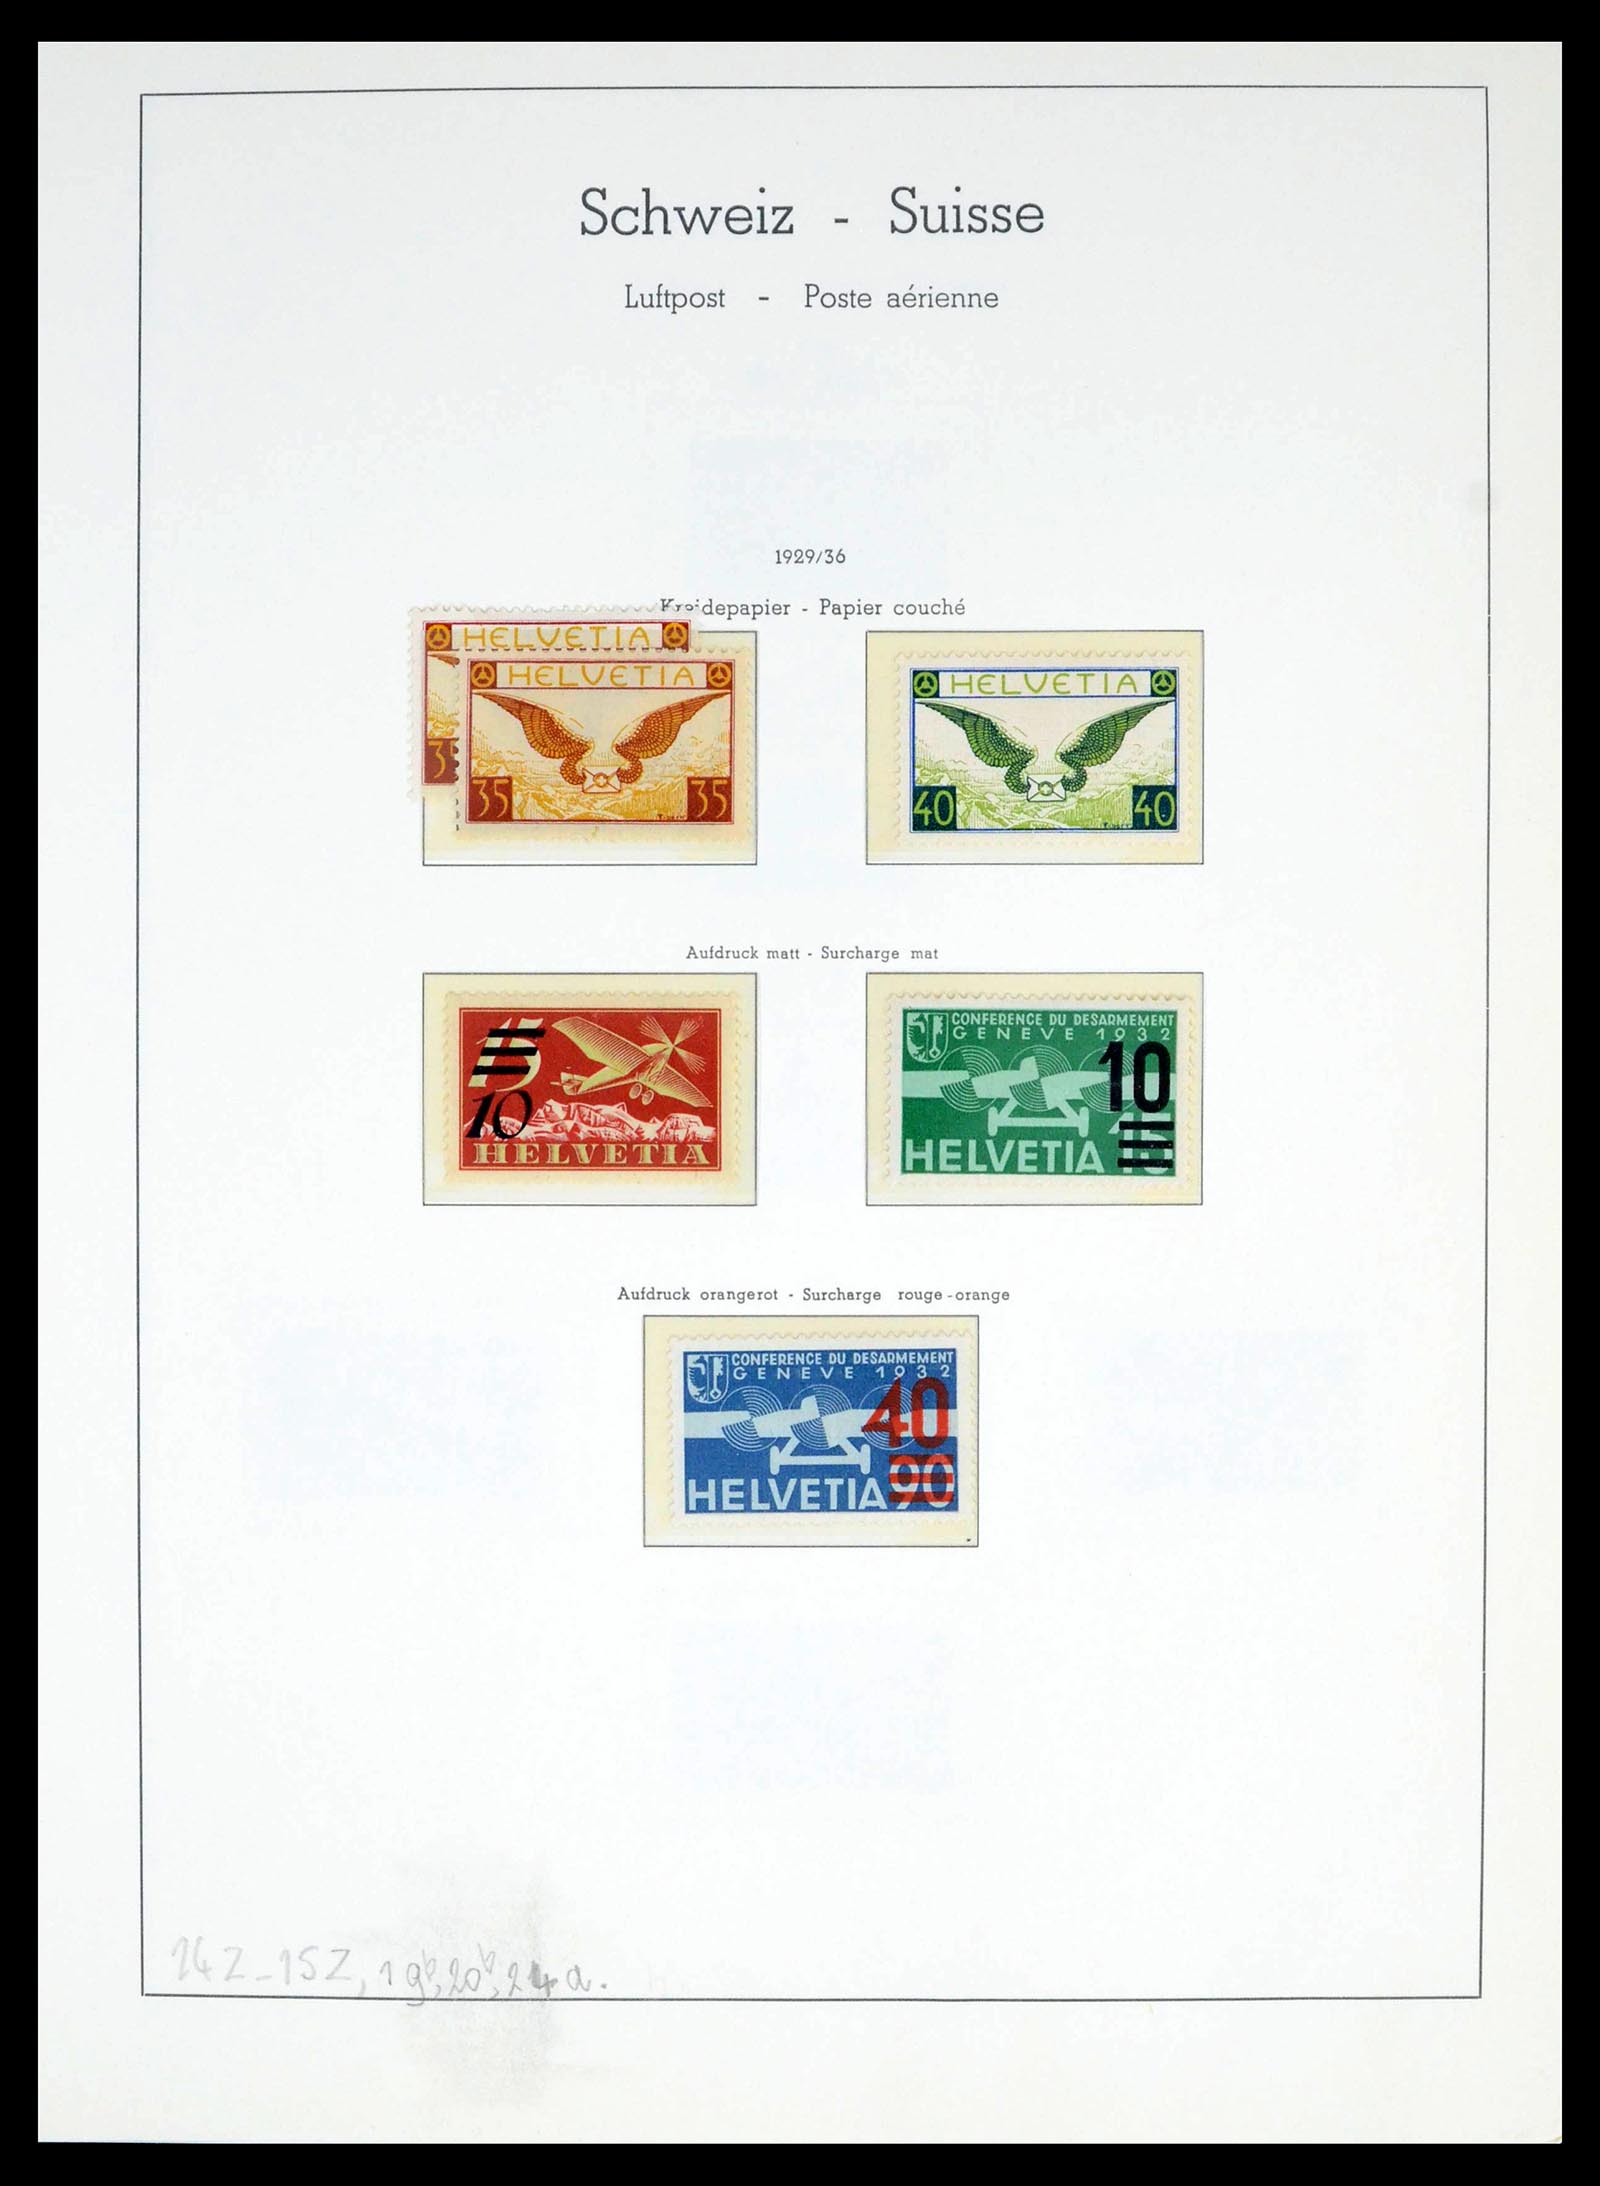 39420 0060 - Stamp collection 39420 Switzerland 1862-1974.